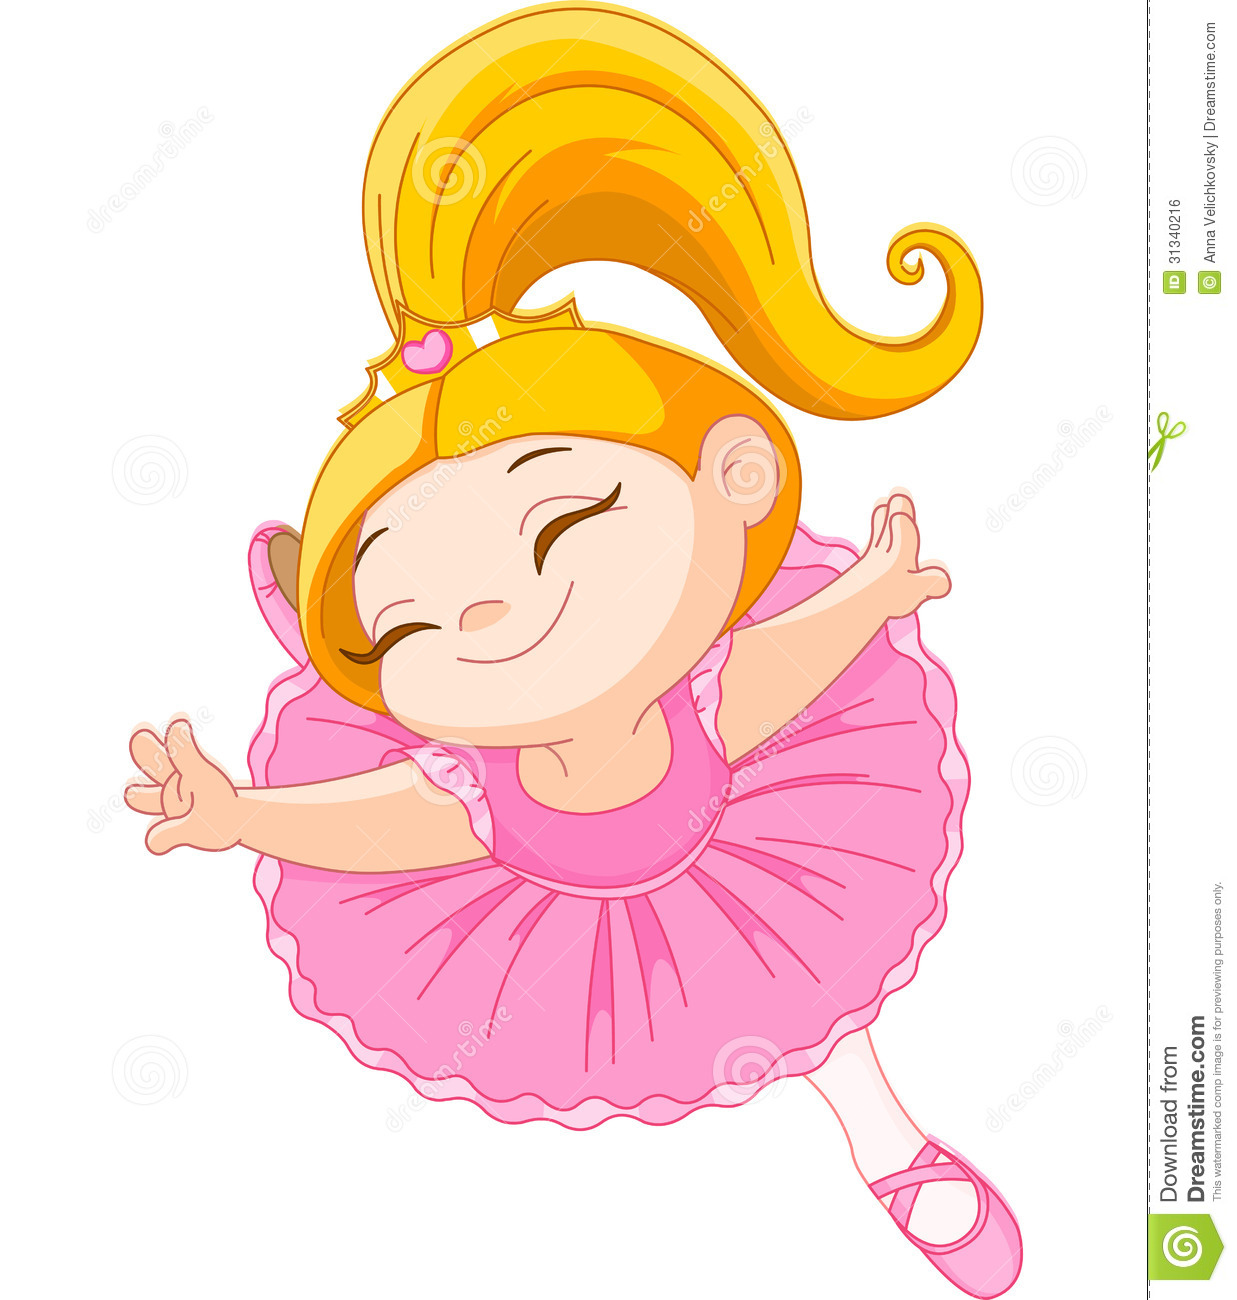 Little Ballerina Royalty Free Stock Image   Image  31340216